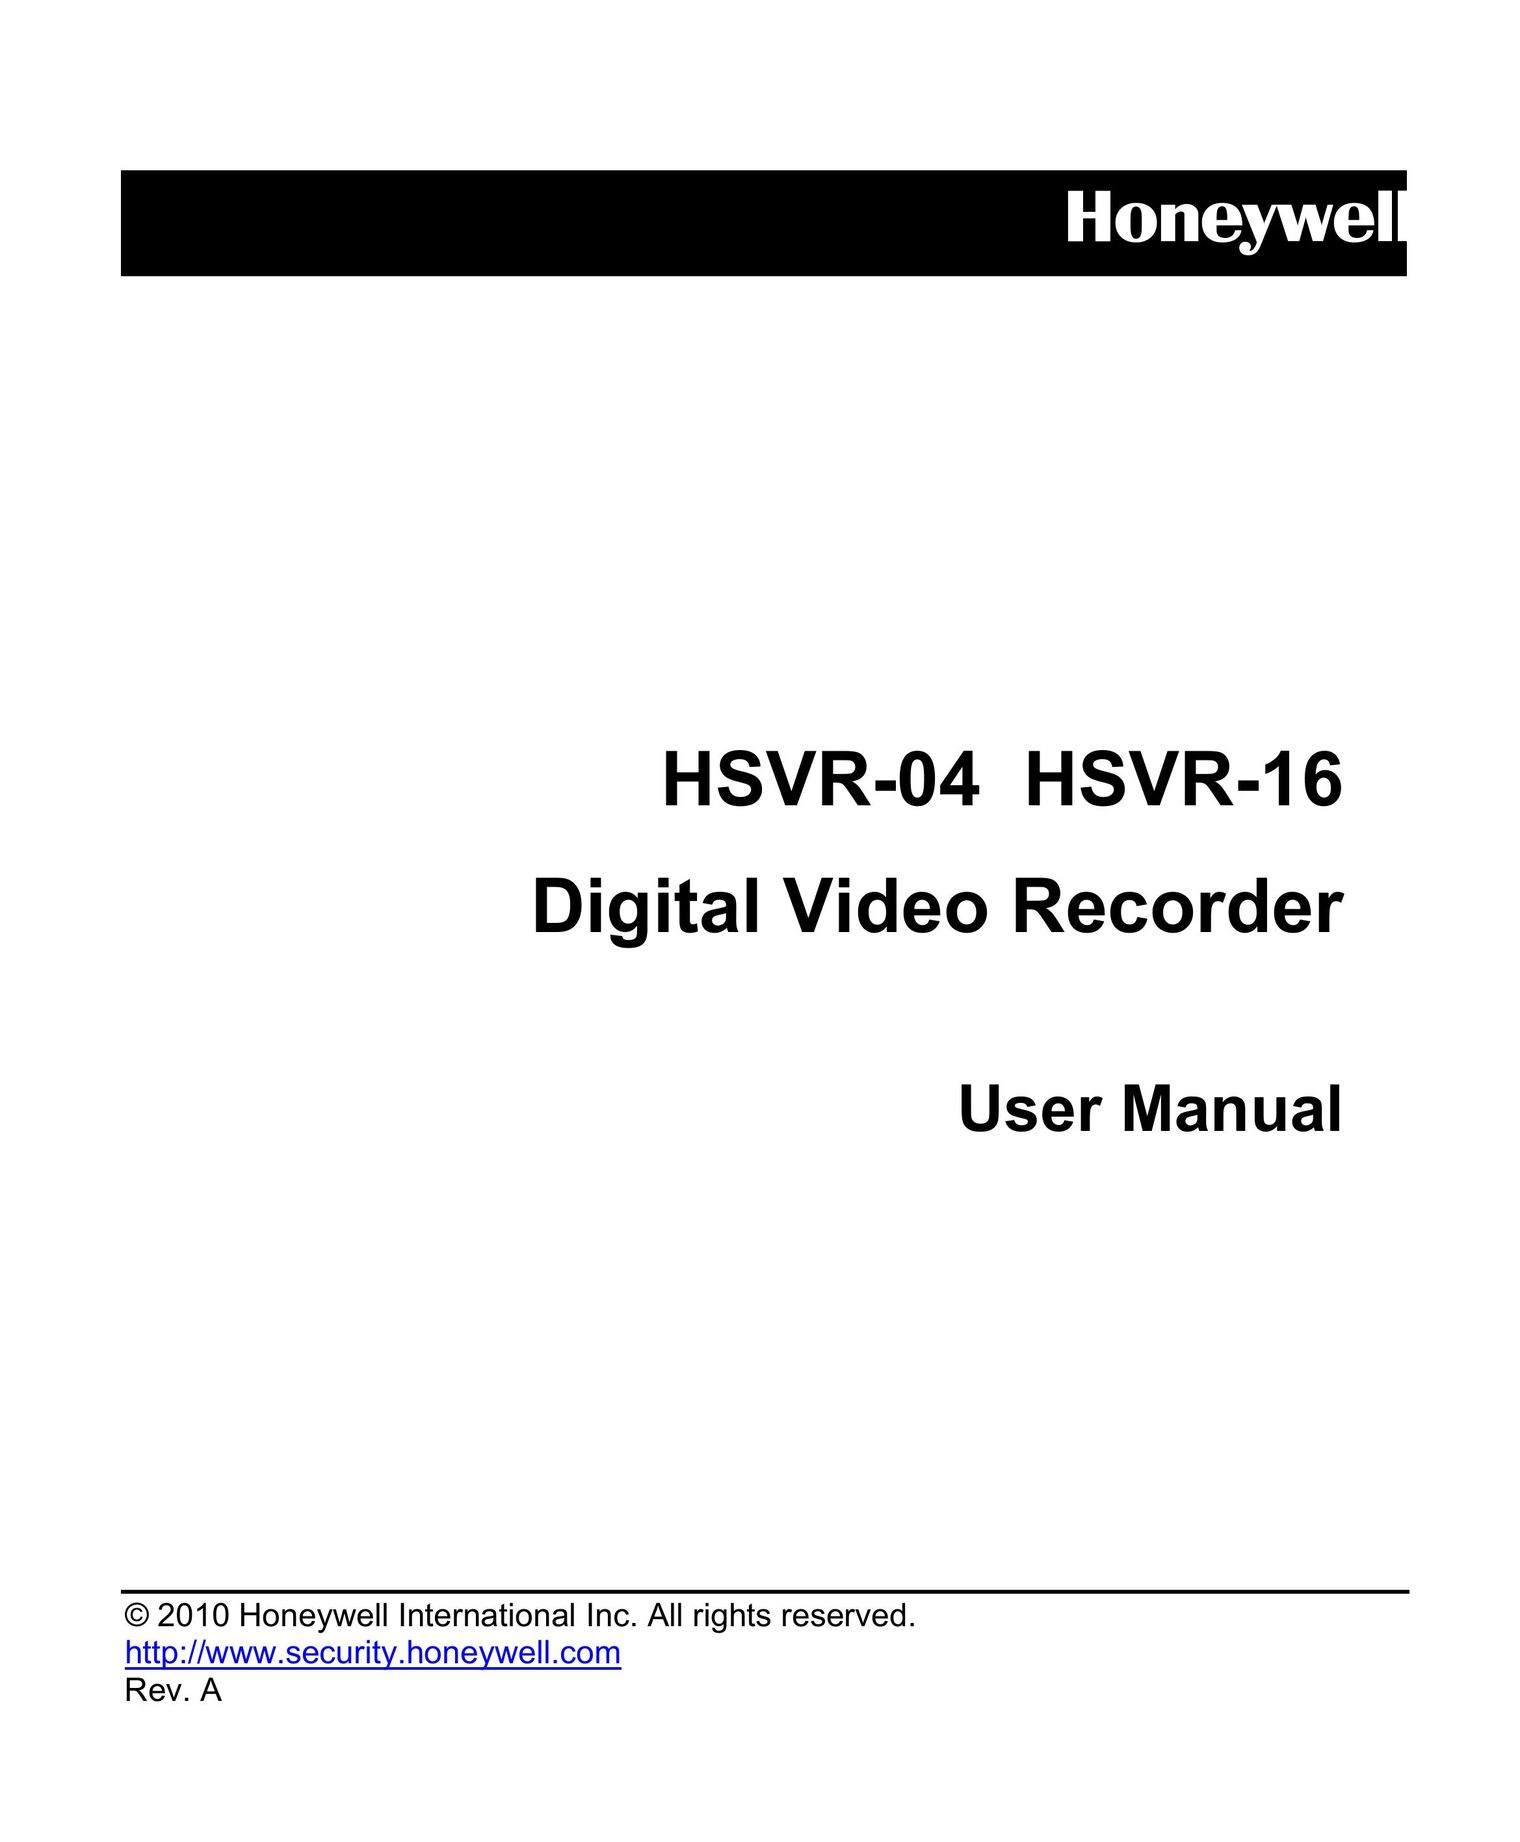 Honeywell HSVR-04 DVR User Manual